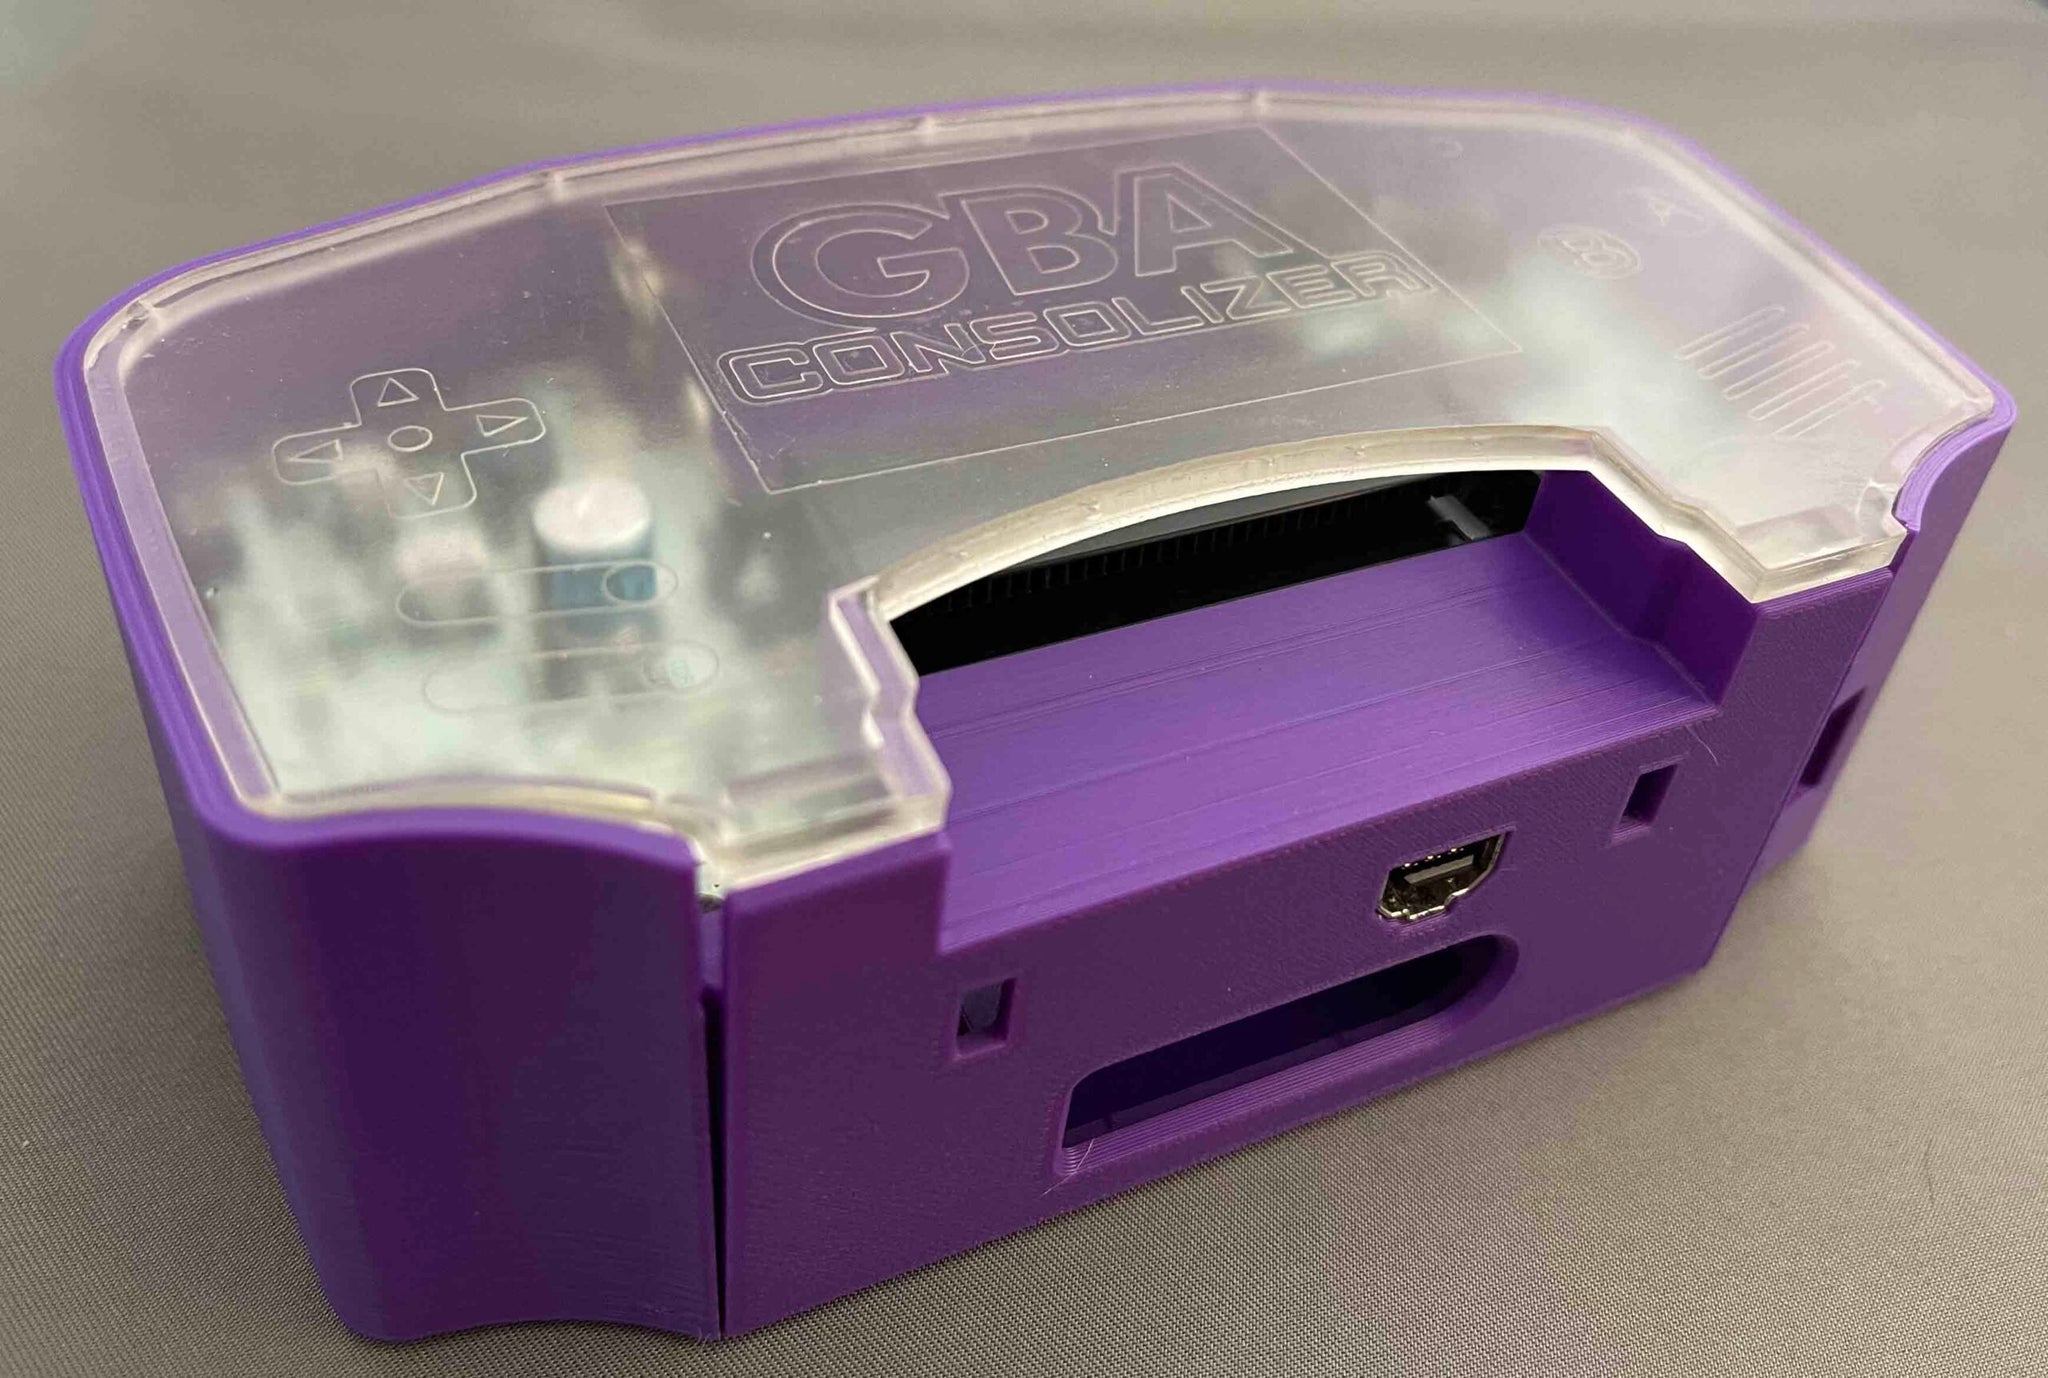 Nintendo Game Boy Advance GBA Consolizer Installation Services